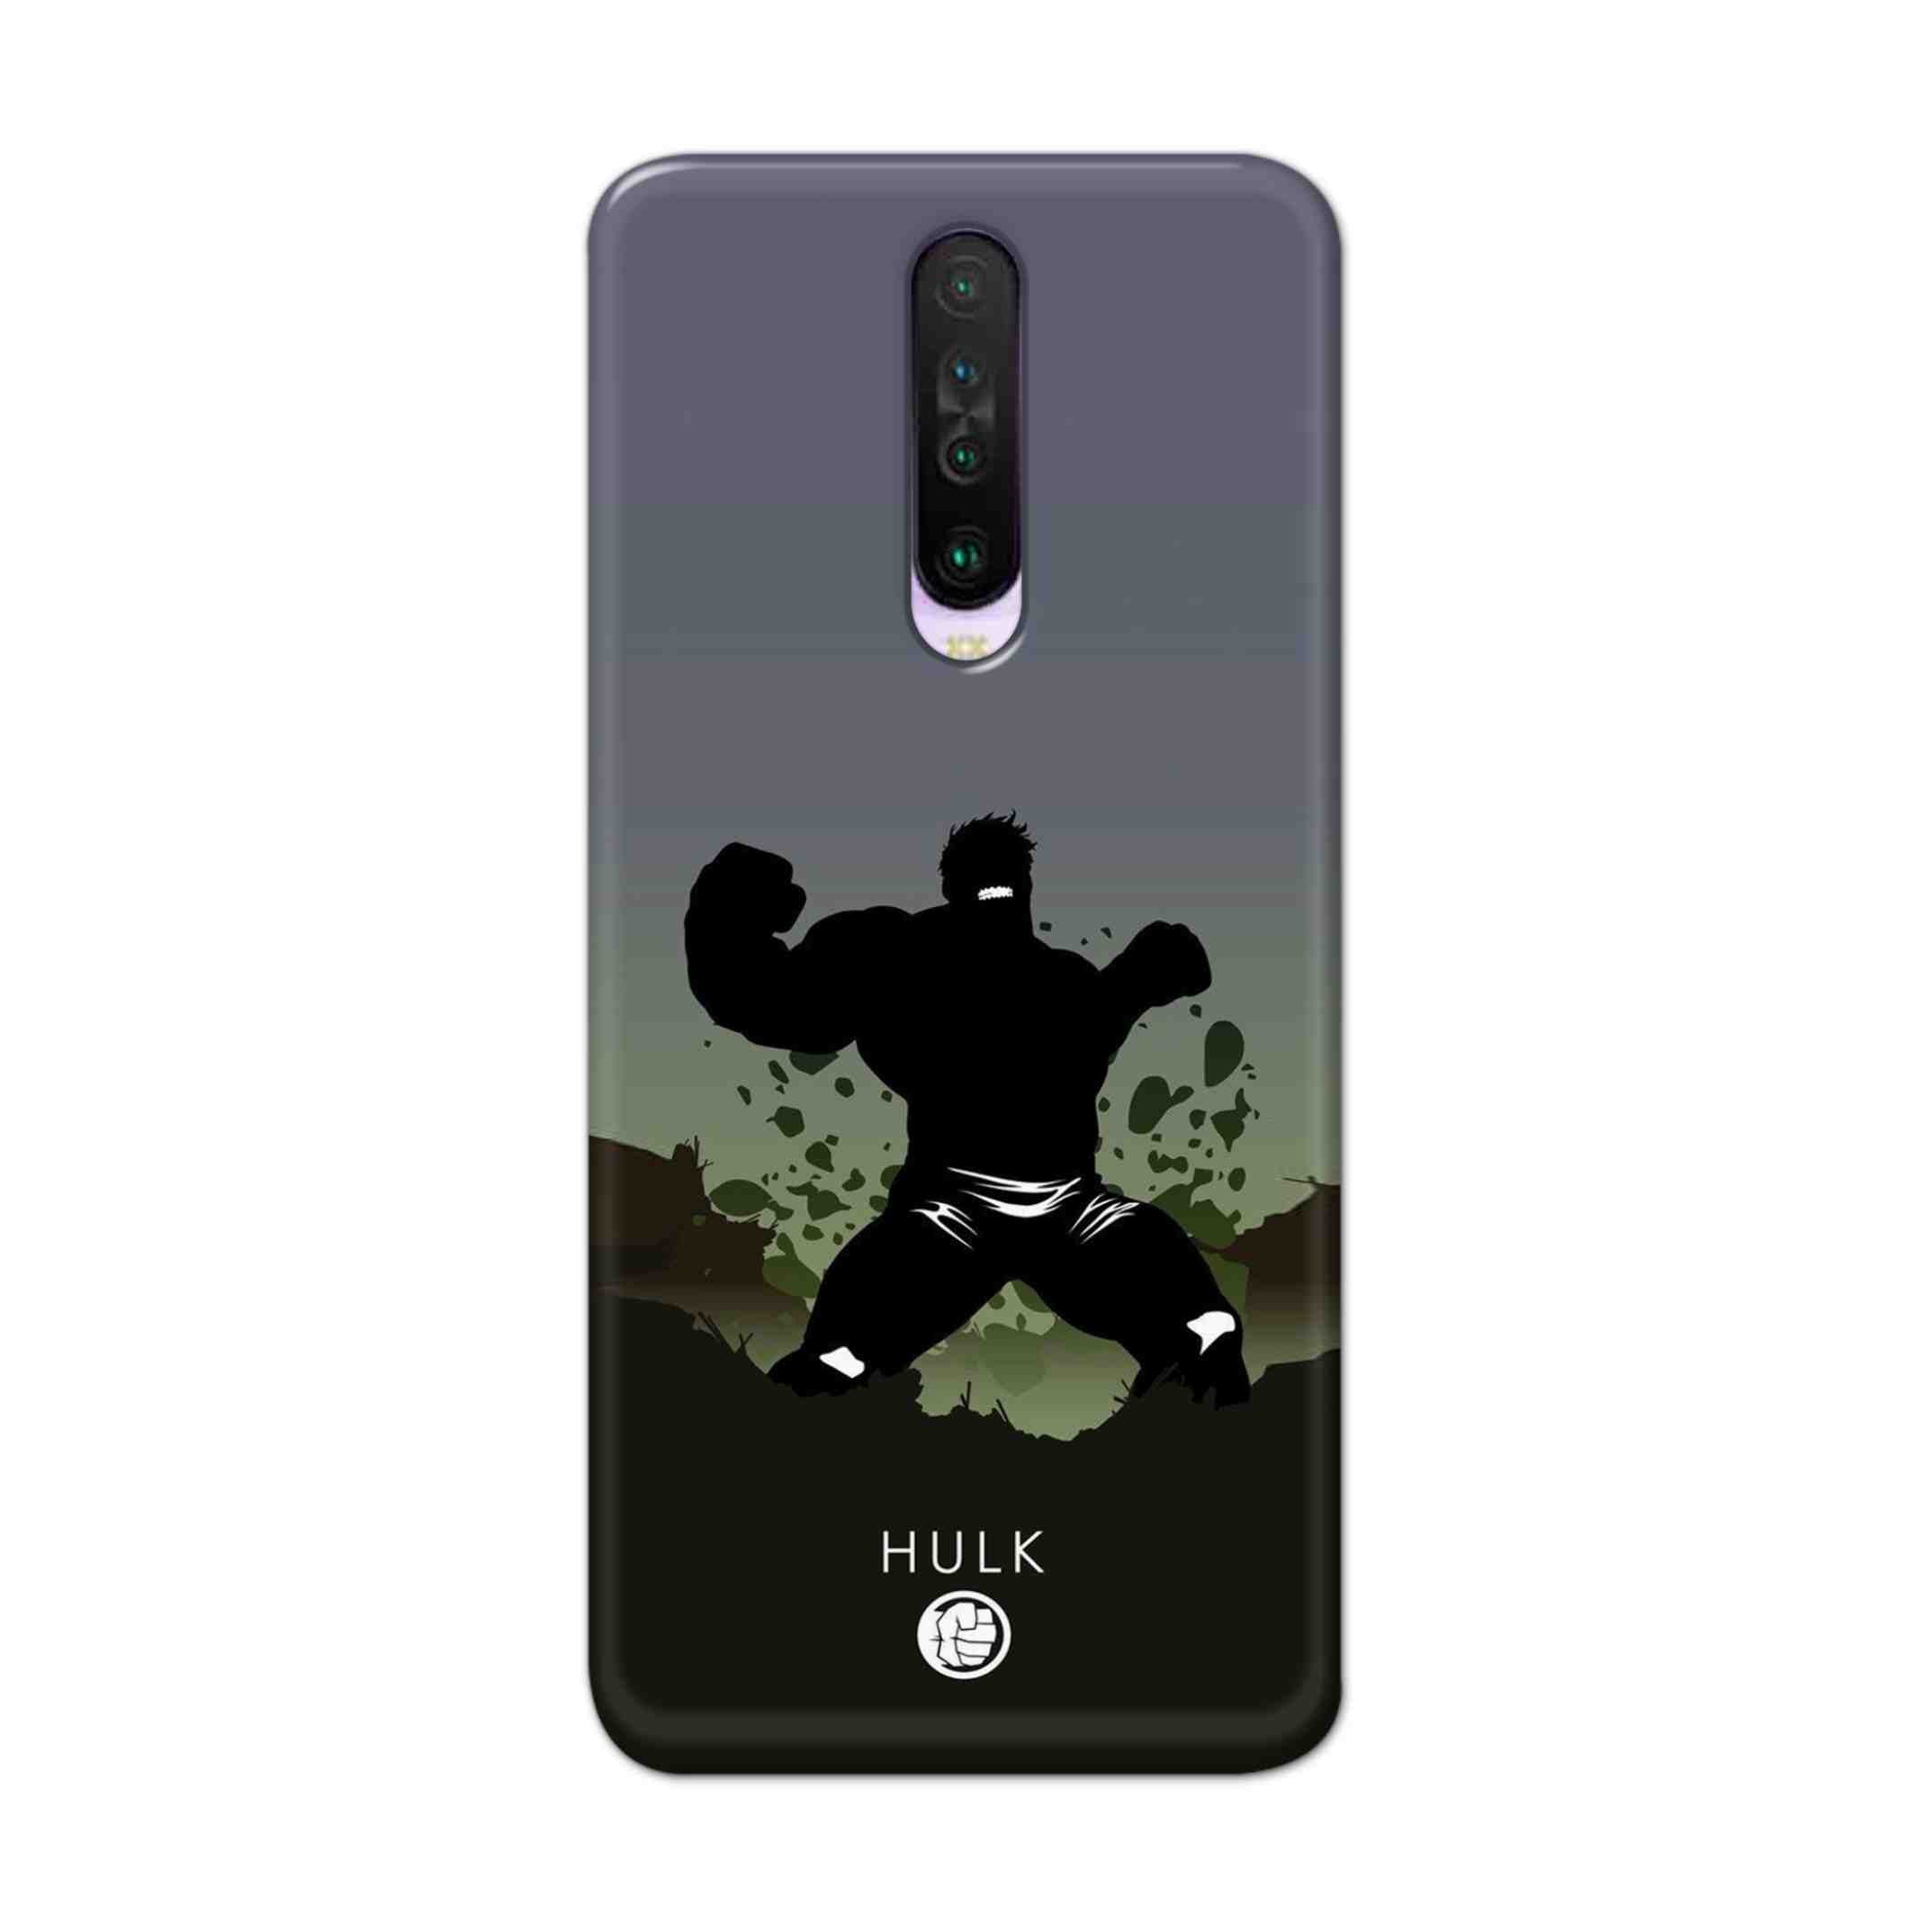 Buy Hulk Drax Hard Back Mobile Phone Case Cover For Poco X2 Online